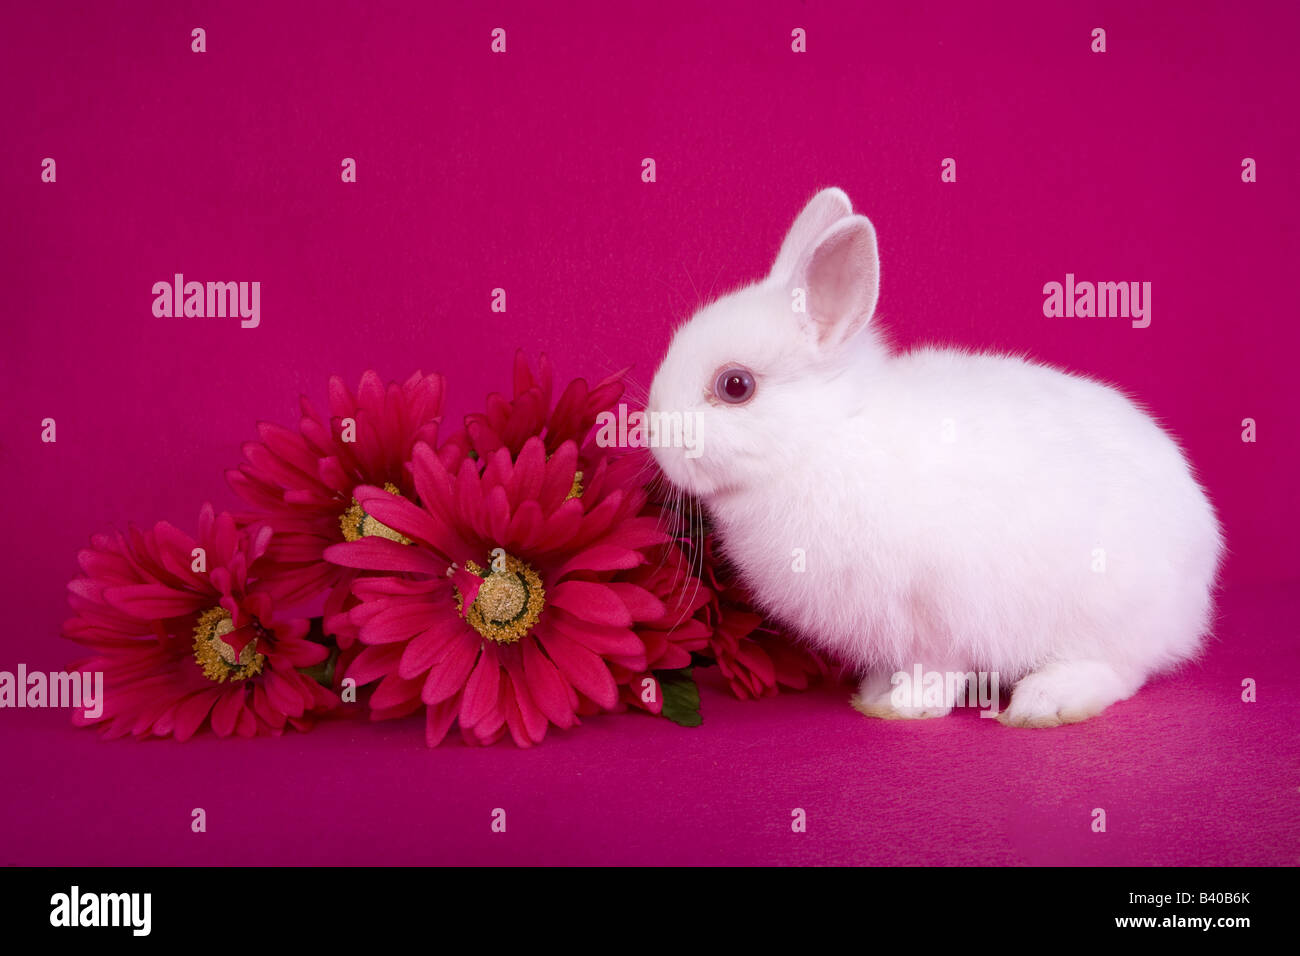 Cute white baby Netherland Dwarf bunny rabbit on hot pink